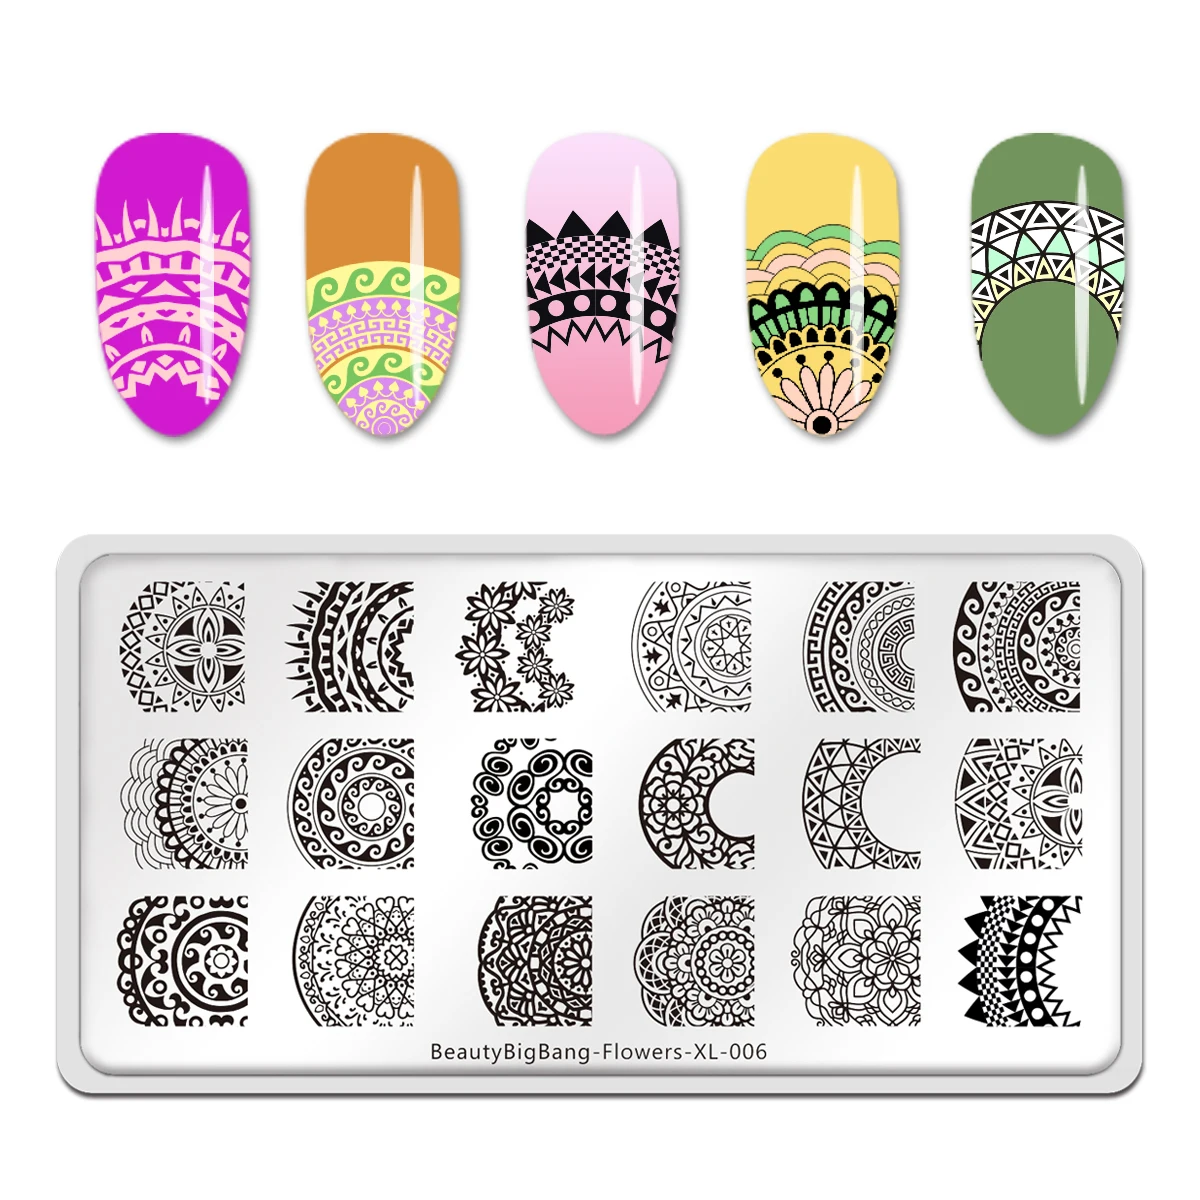 Buy BeautyBigBang Flowers Nail Art Stamping Plates Mandala Pattern Stamp Template DIY Design Image Printing Tools NEW on